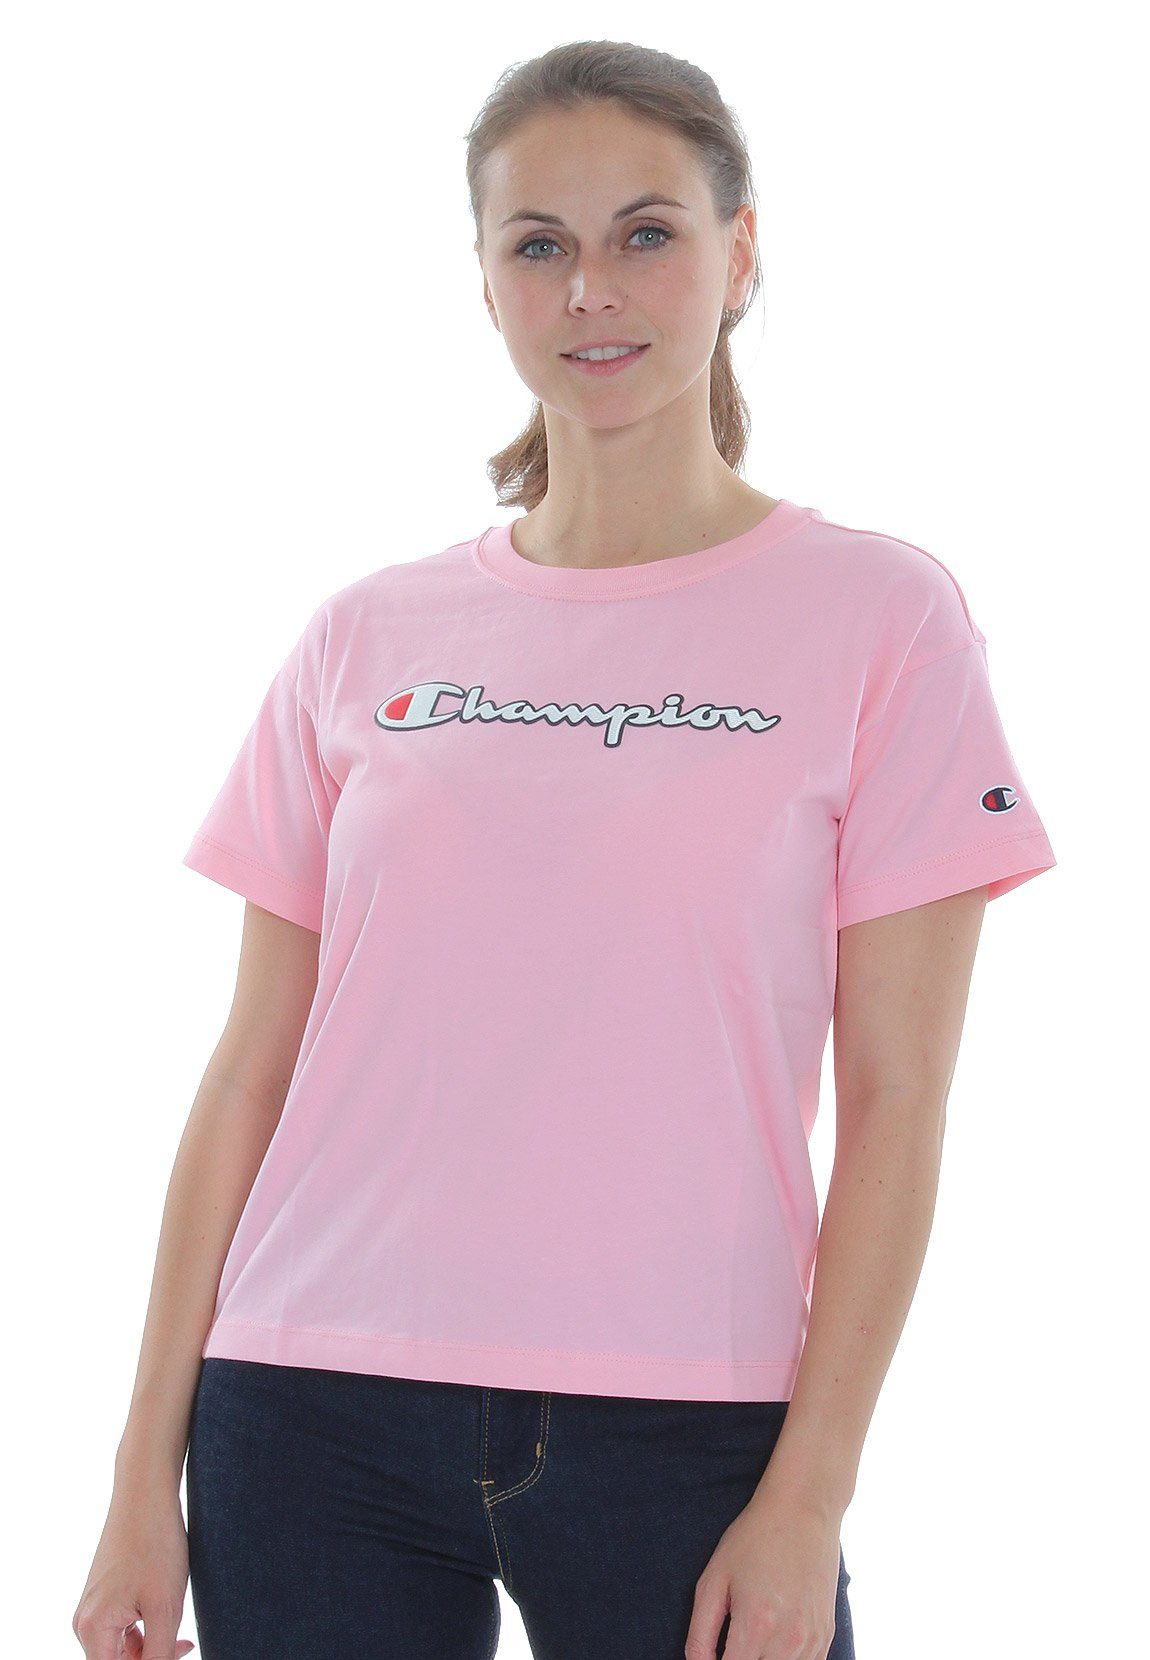 Anders robot Graden Celsius Champion T-Shirt Champion Damen T-Shirt 112650 PS024 CNP Pink